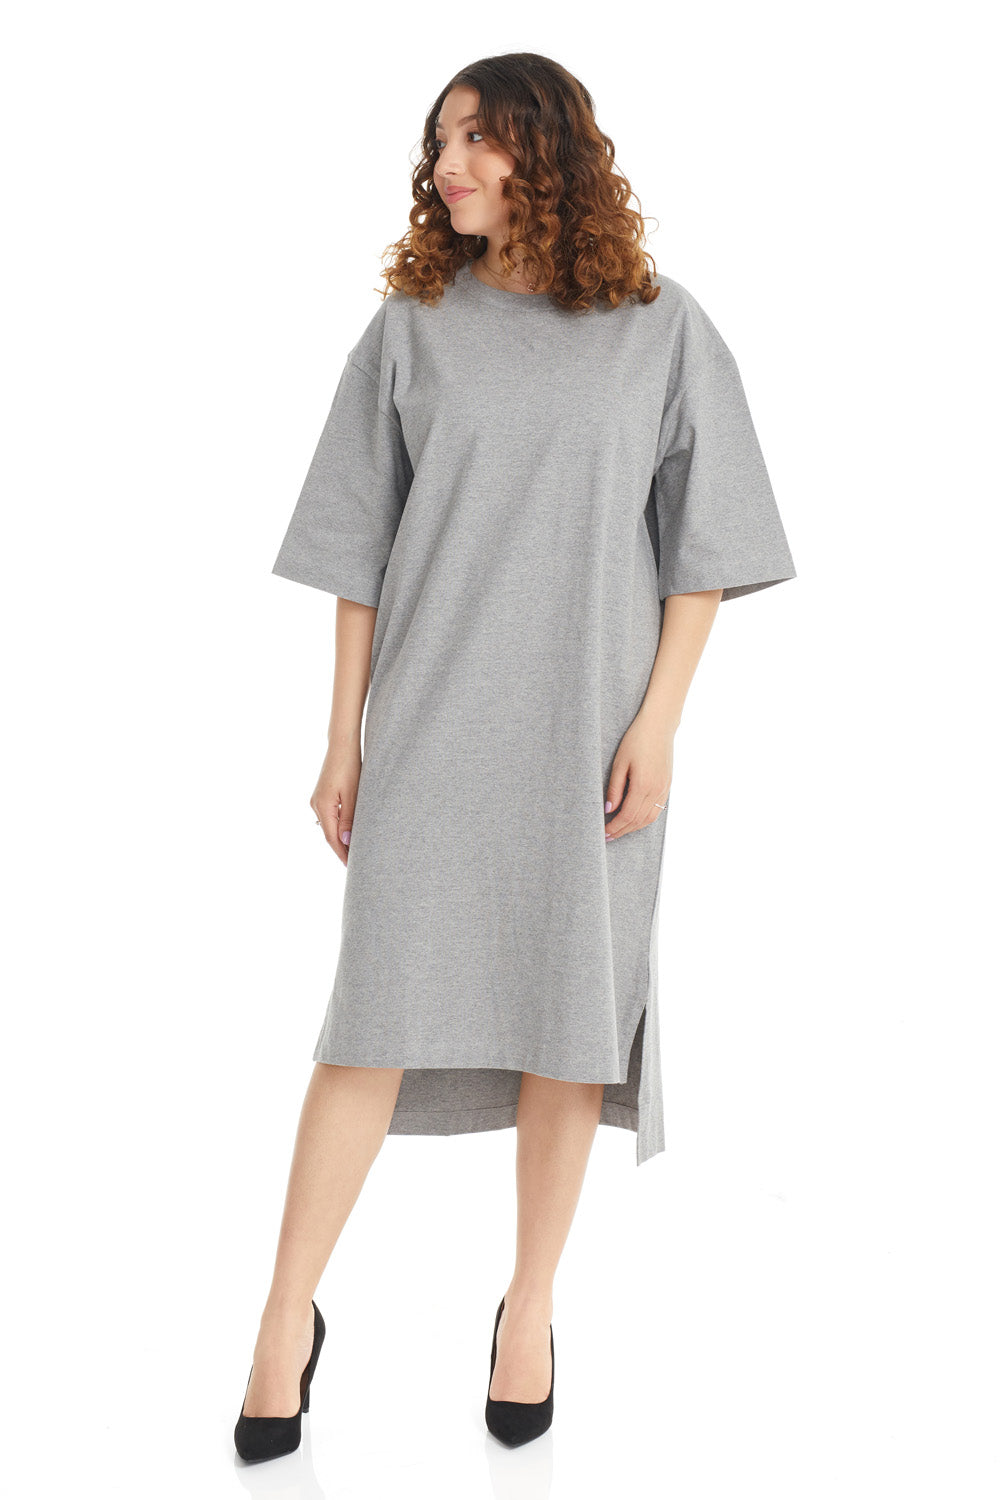 long midi length heather grey high low cotton crew neck 3/4 sleeve t-shirt dress